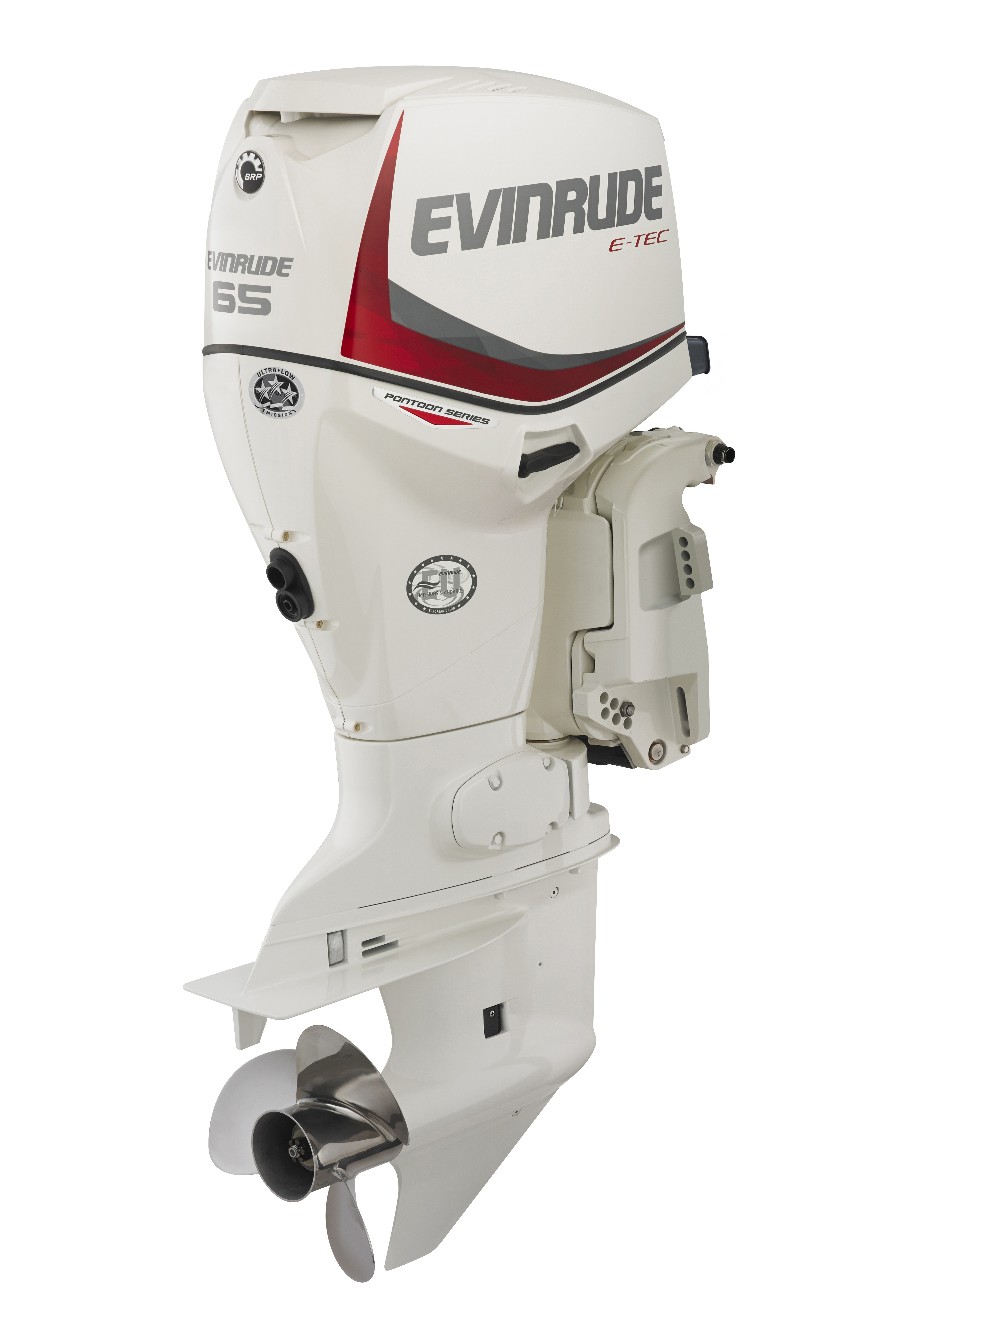 Evinrude Outboard Motors